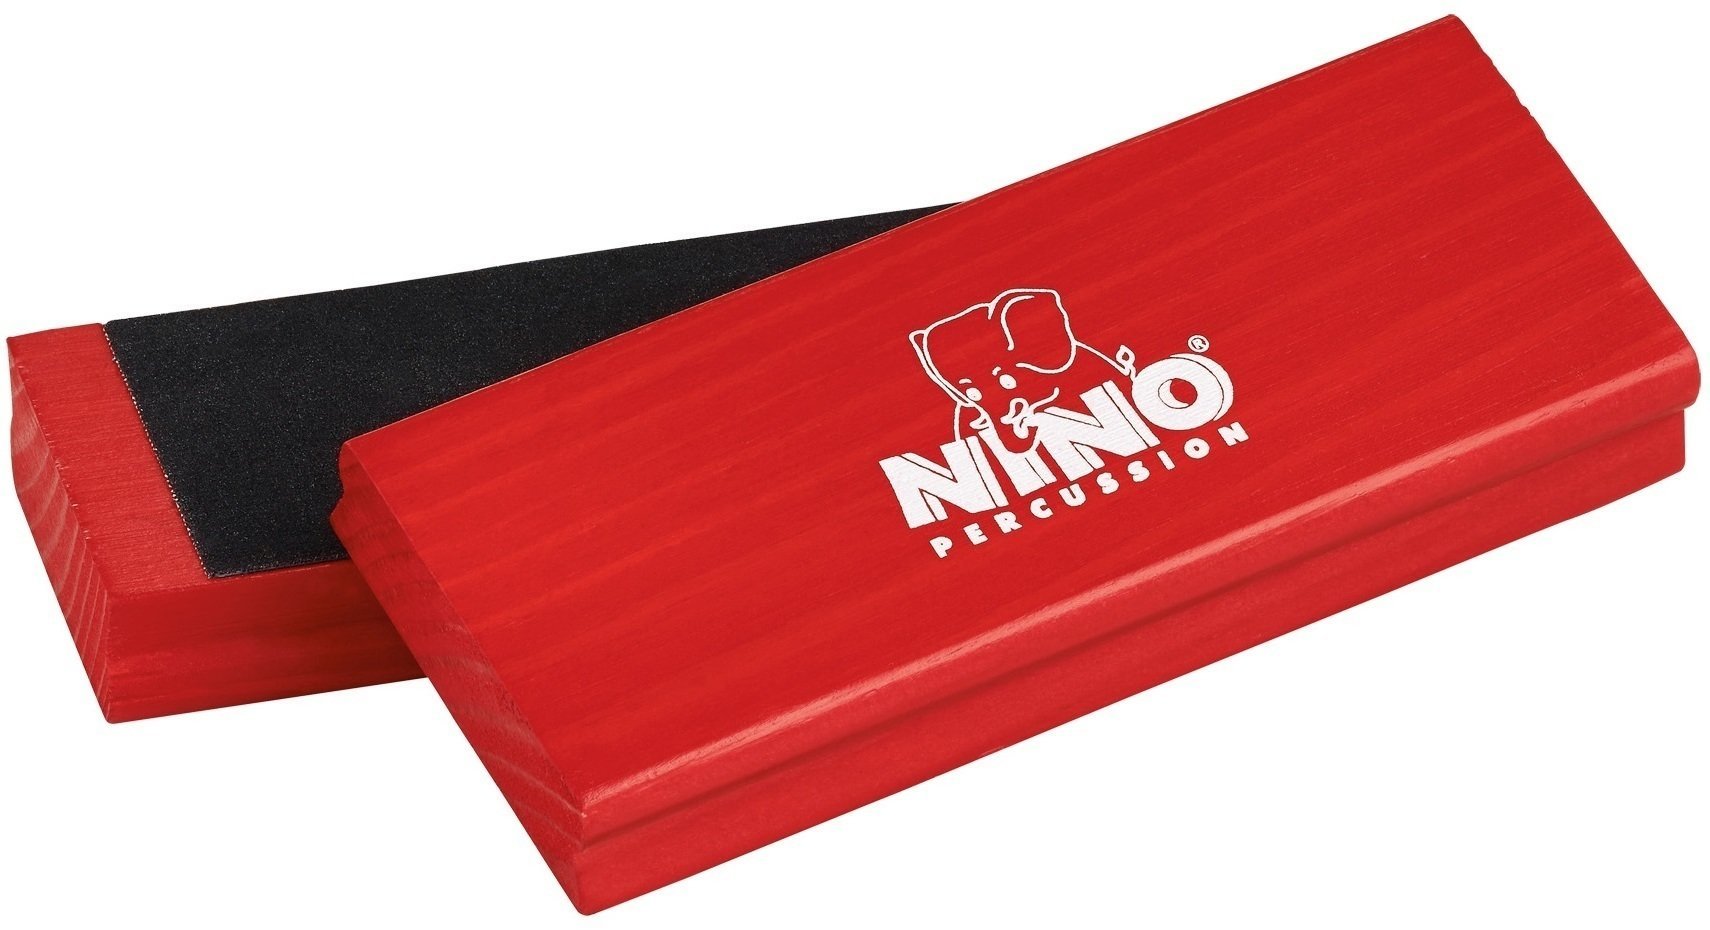 Perkusjny zestaw - edukacyjny Nino NINO940R